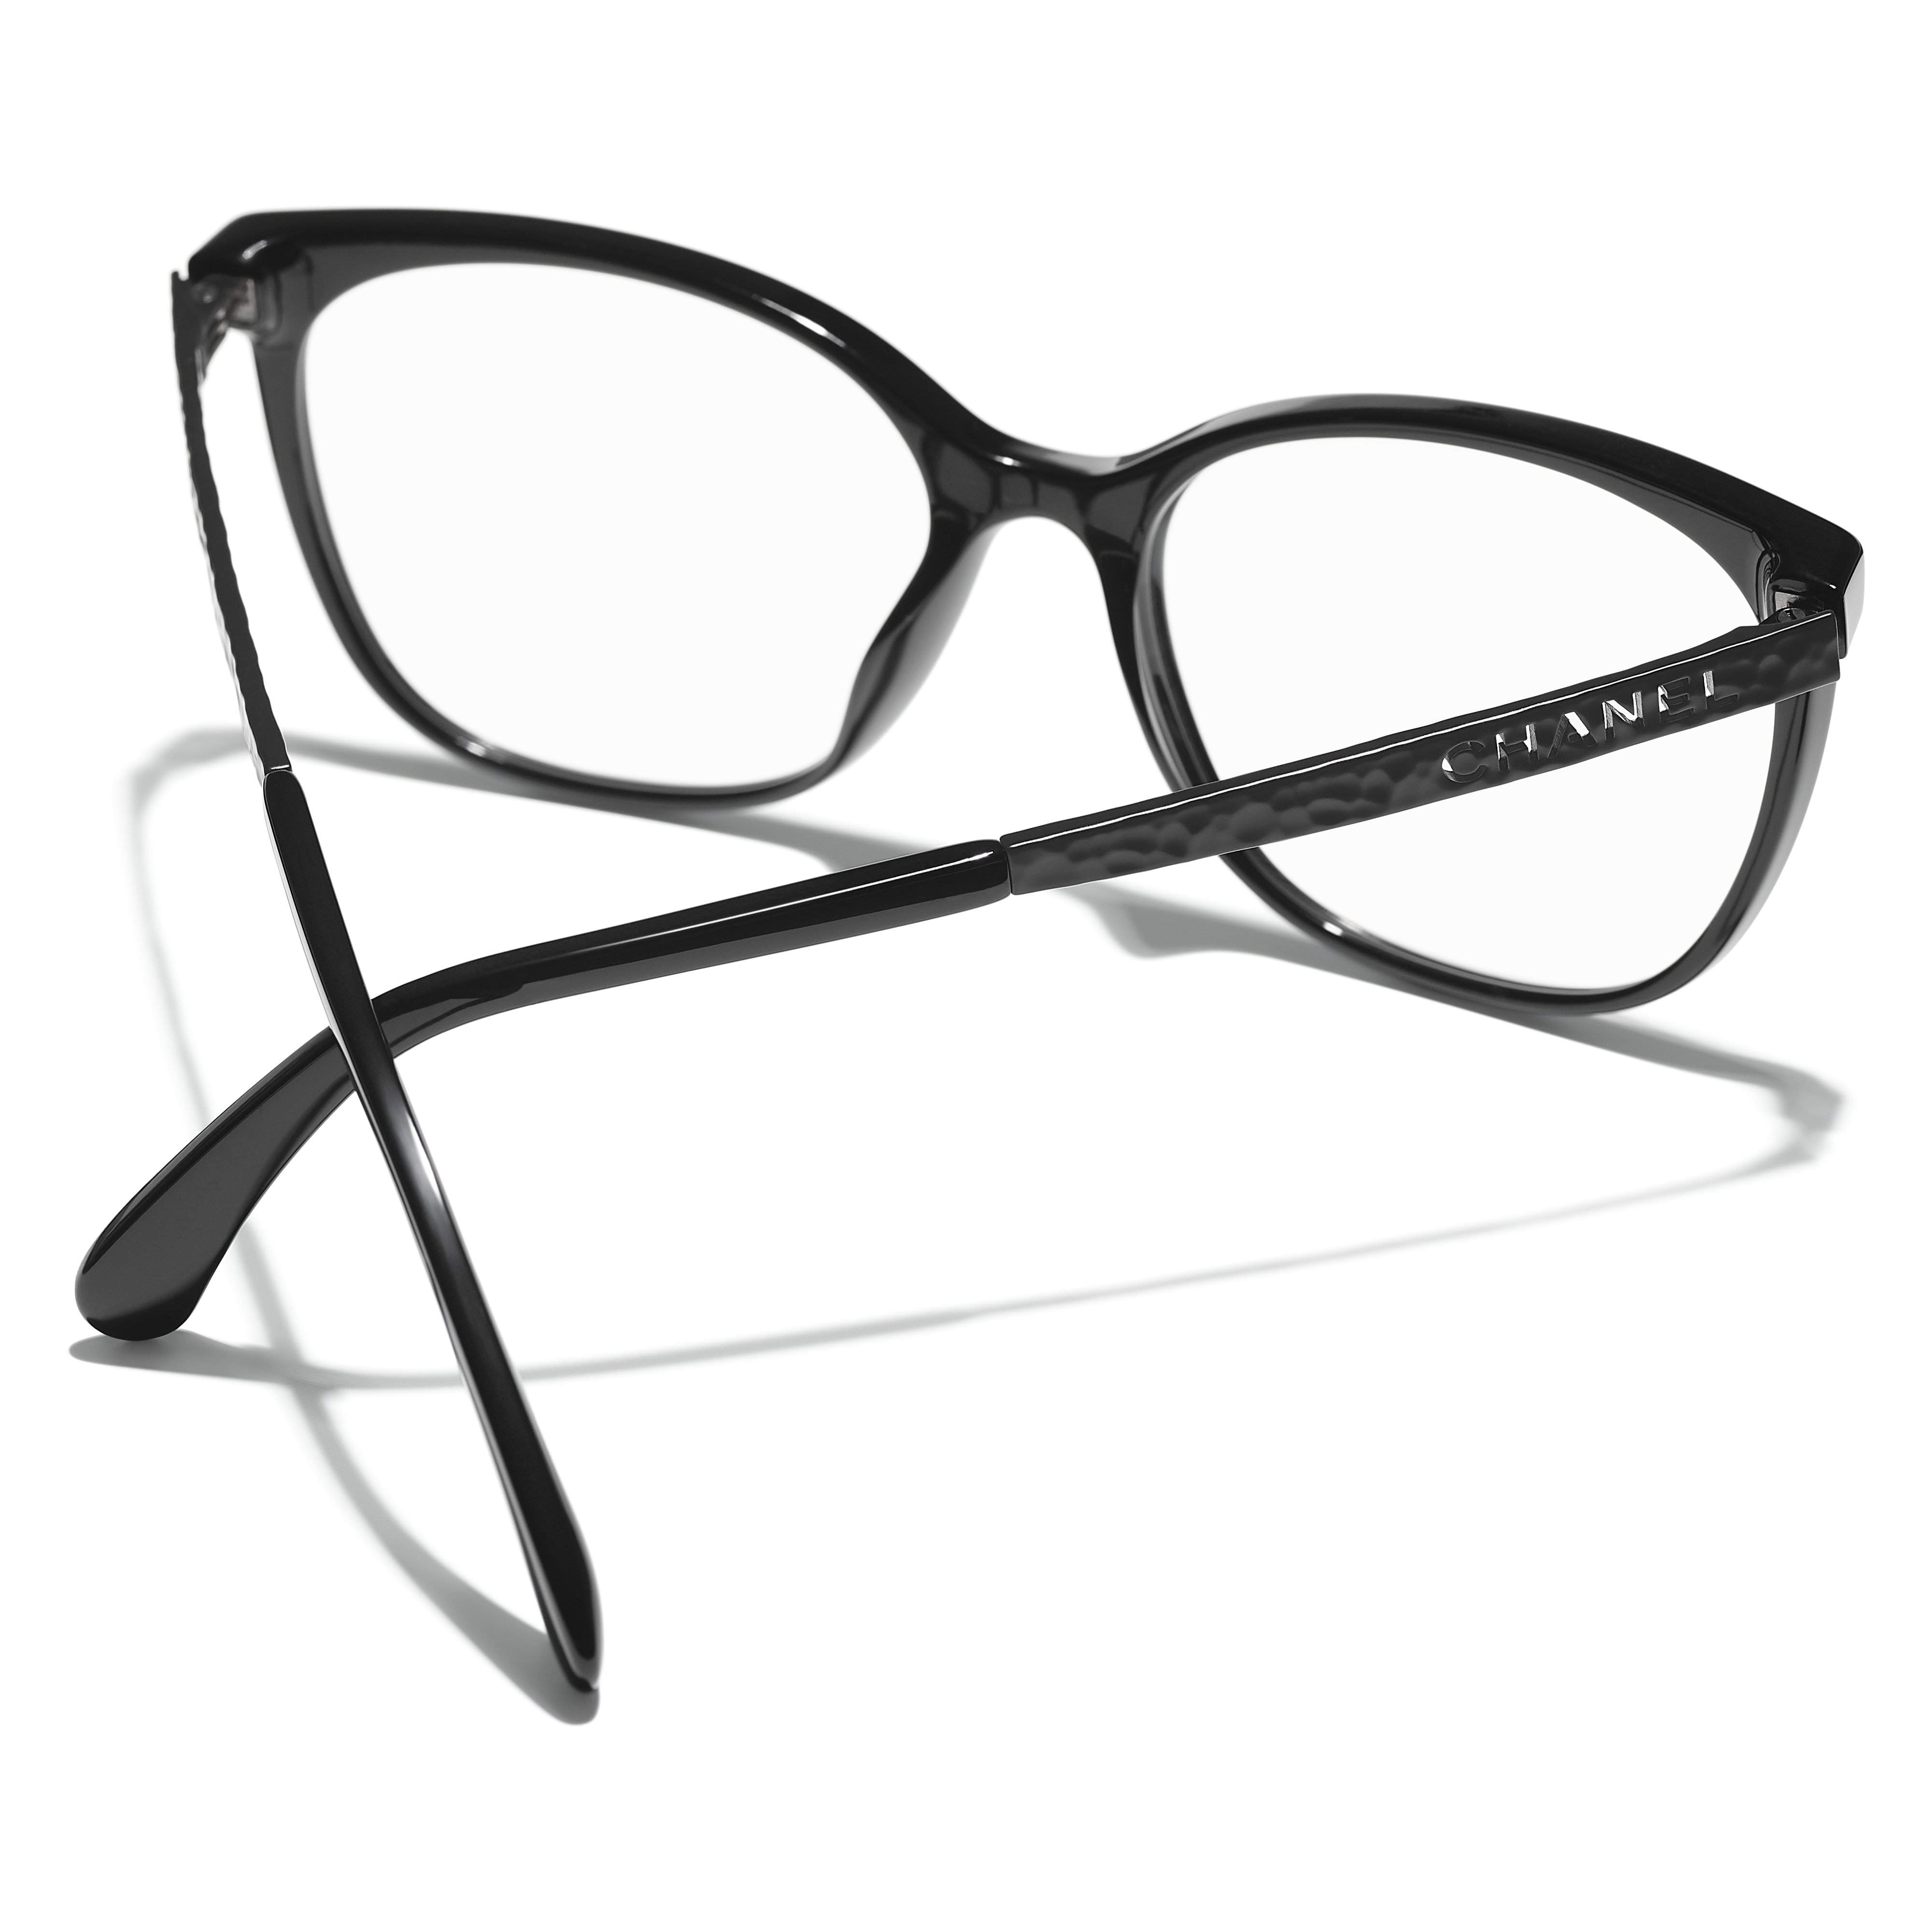 Chanel 3410 1295 Glasses Glasses - Pretavoir